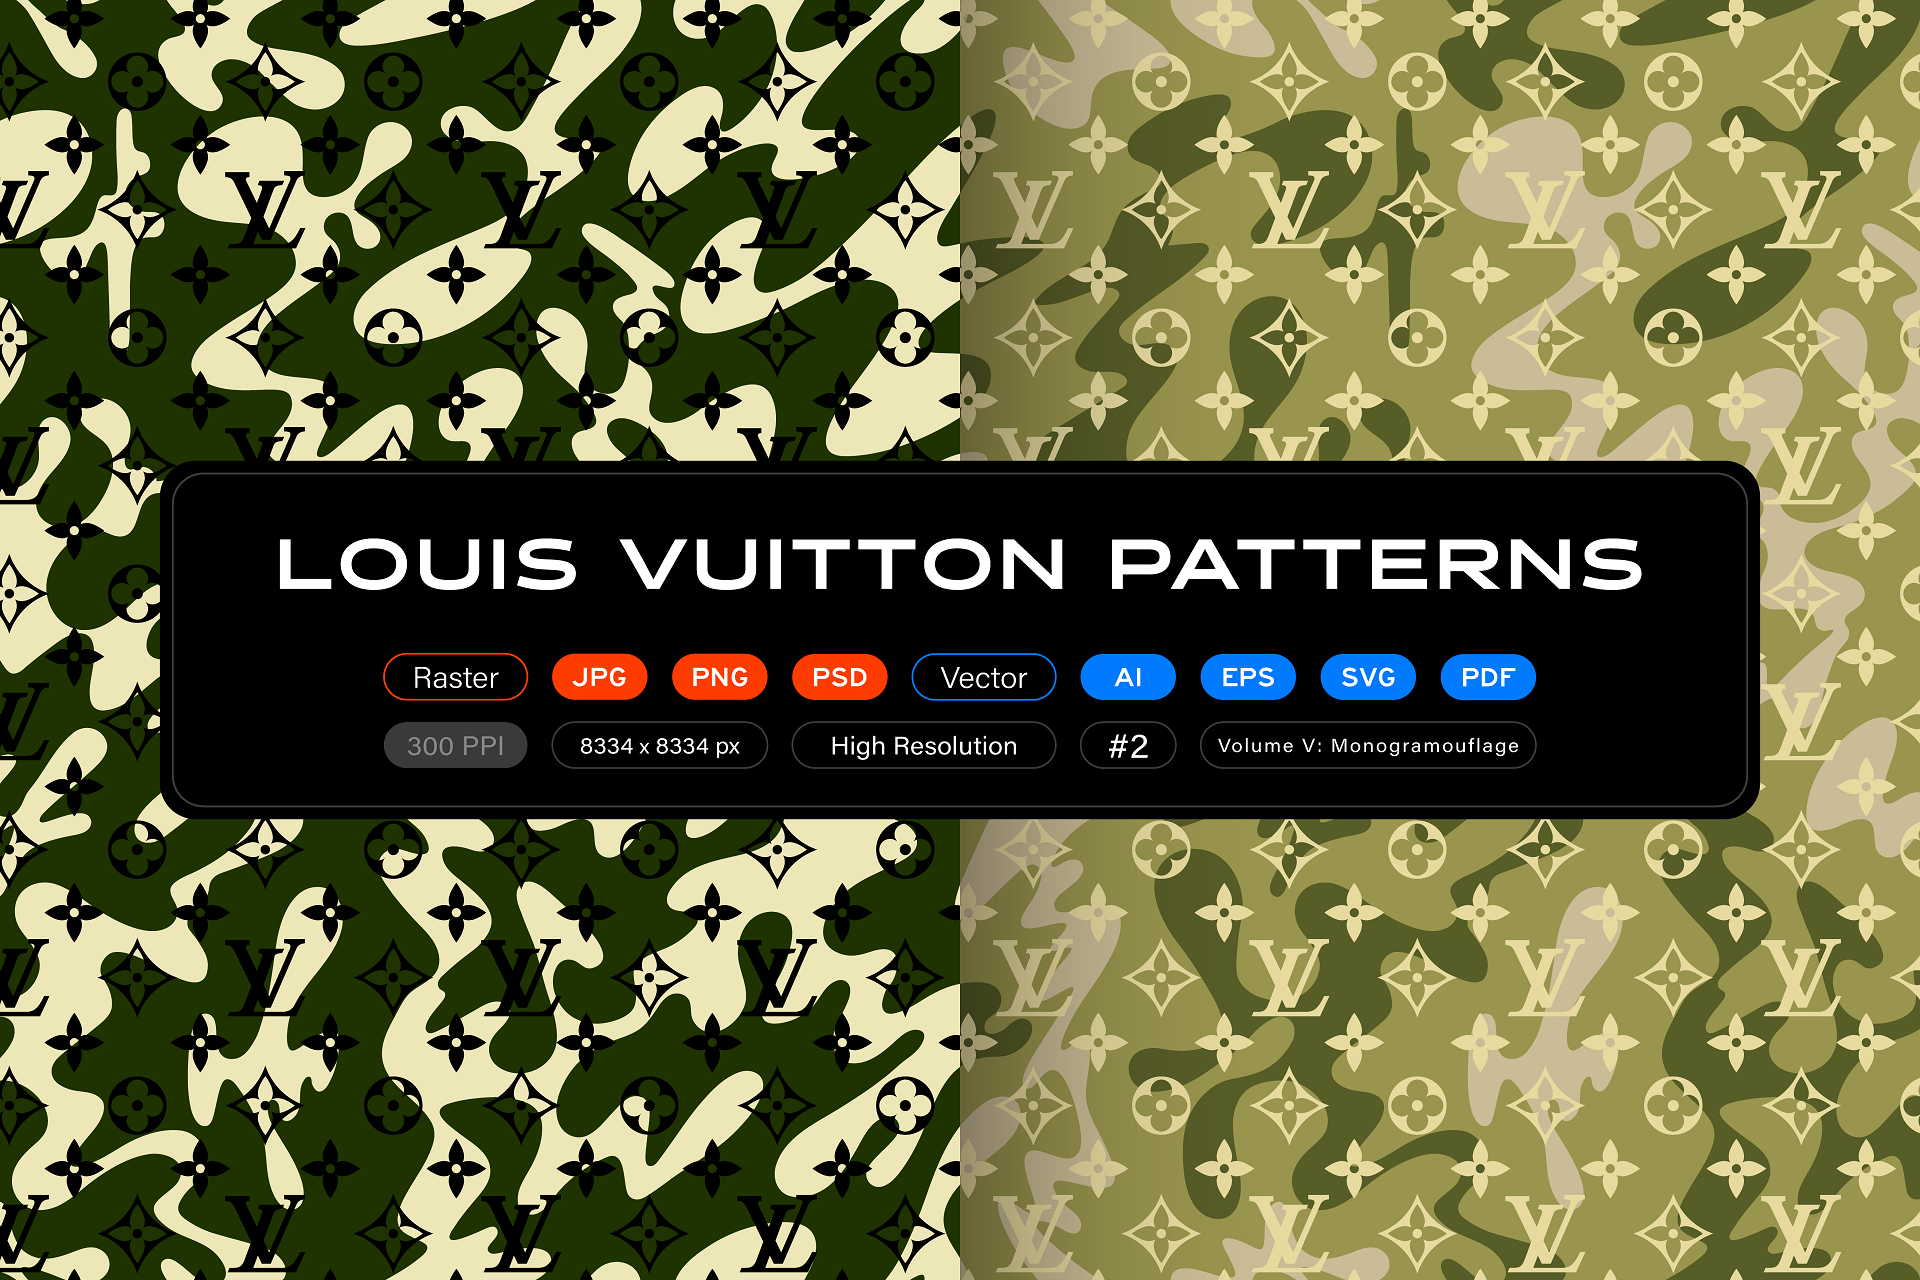 Louis Vuitton Patterns, Vol. 5 Monogramouflage by itsfarahbakhsh